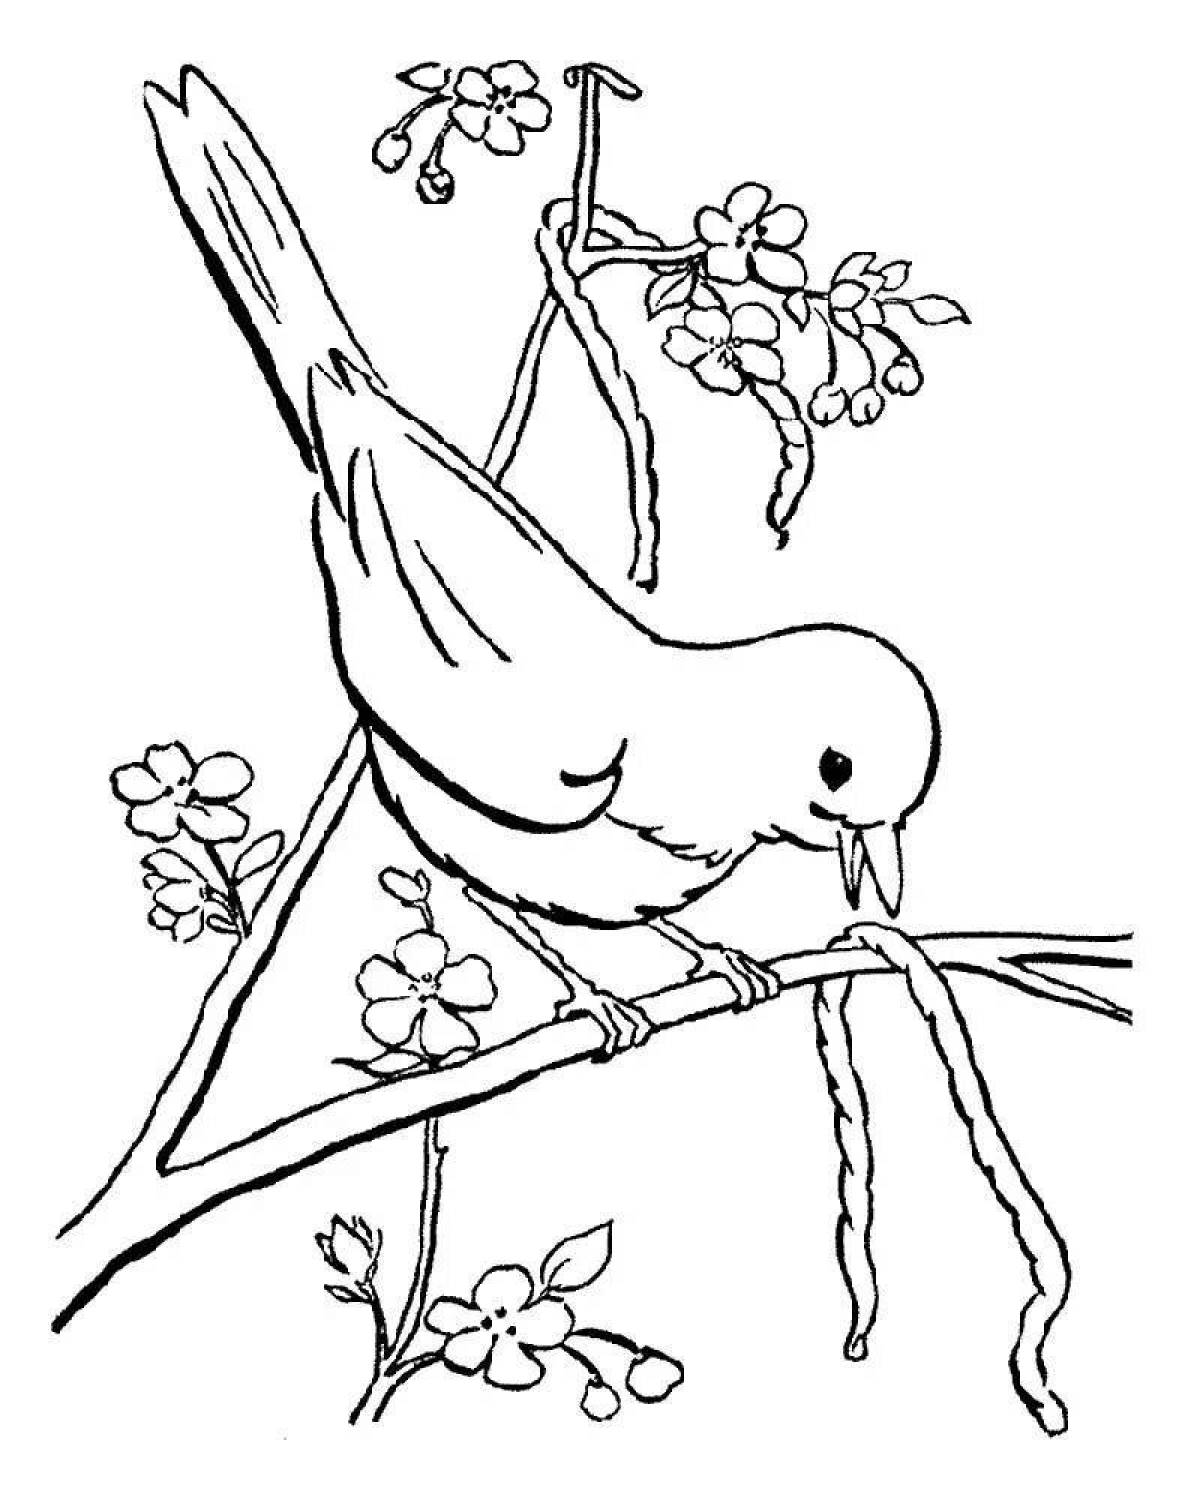 Charming bird on a branch